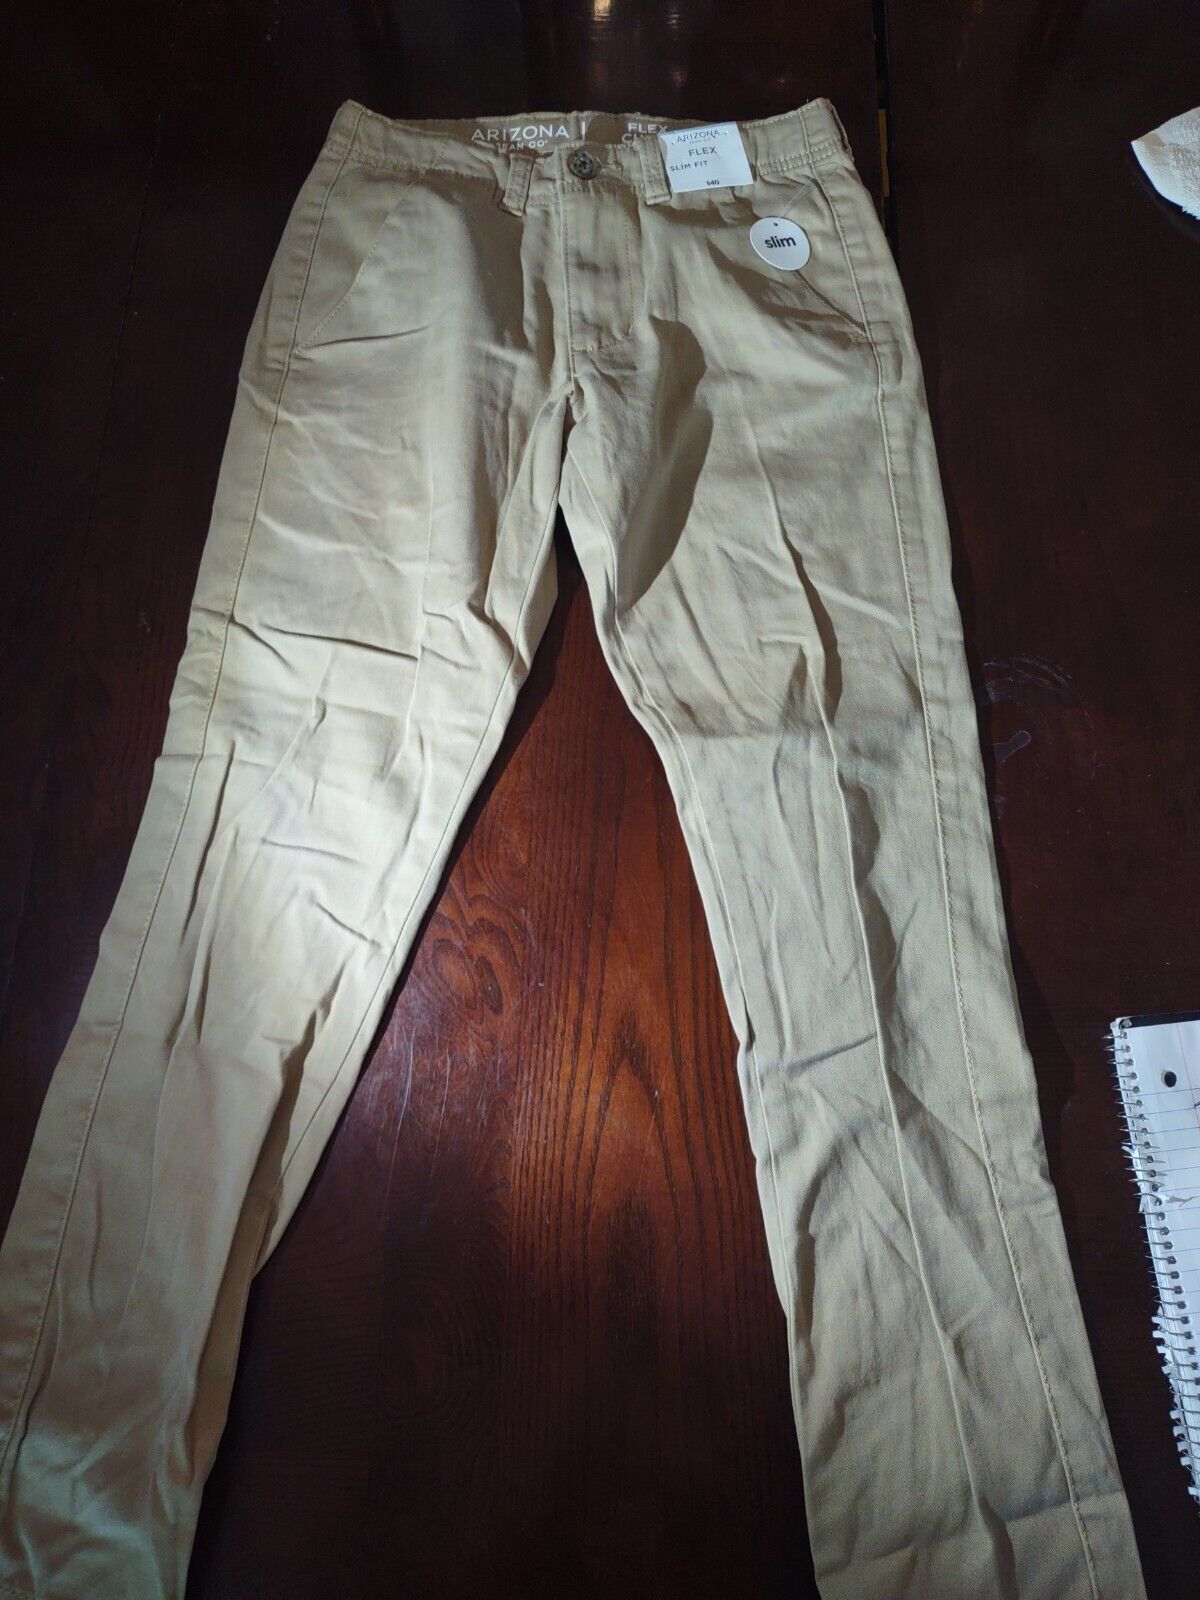 Primary image for Arizona Flex Slim Fit Boys Size 12 Khaki Pants